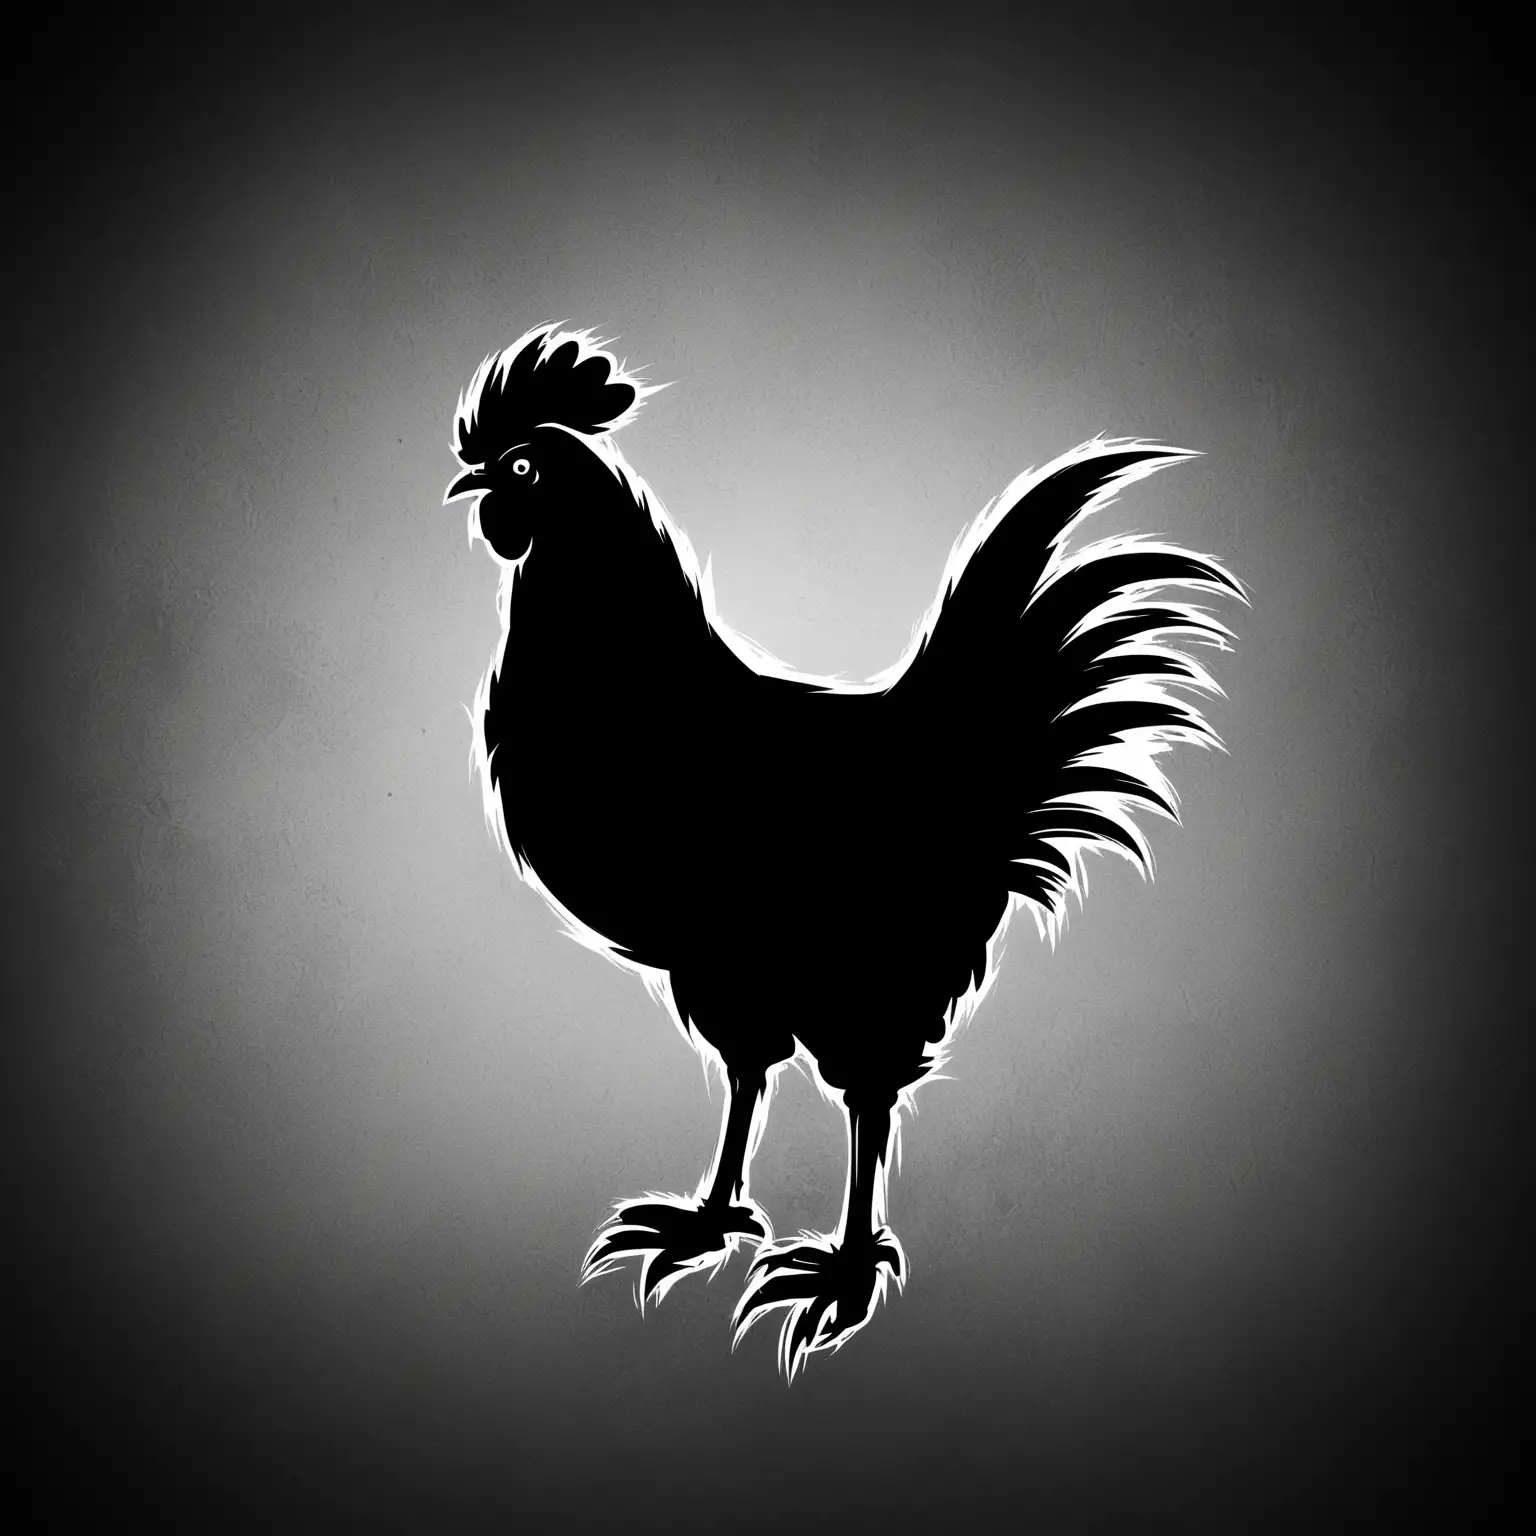 stencil, minimalist, simple, vector art, black and white, silhouette, negative space, evil chicken